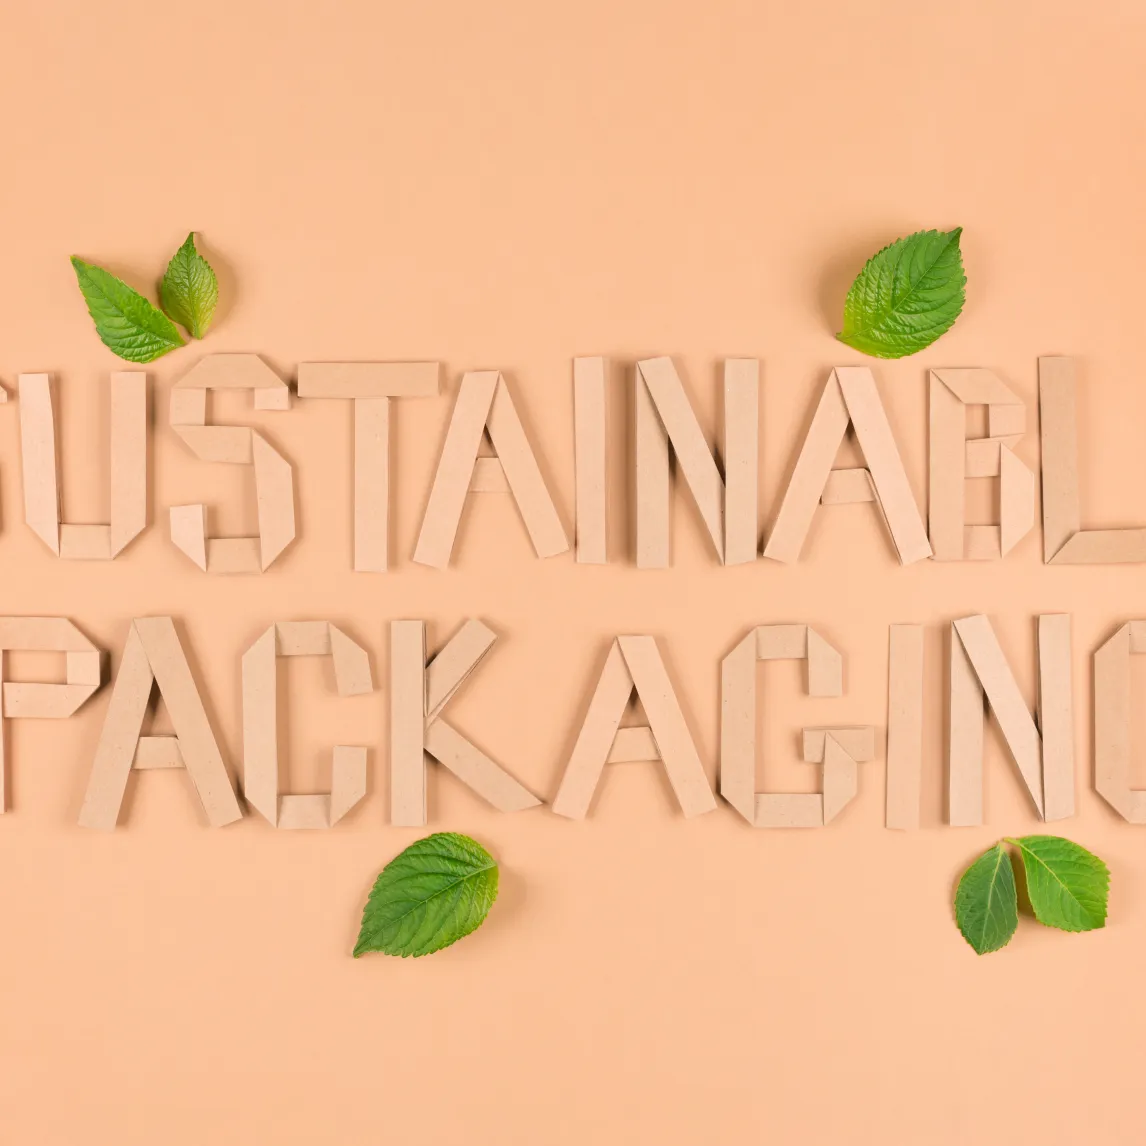 Packaging sostenibile